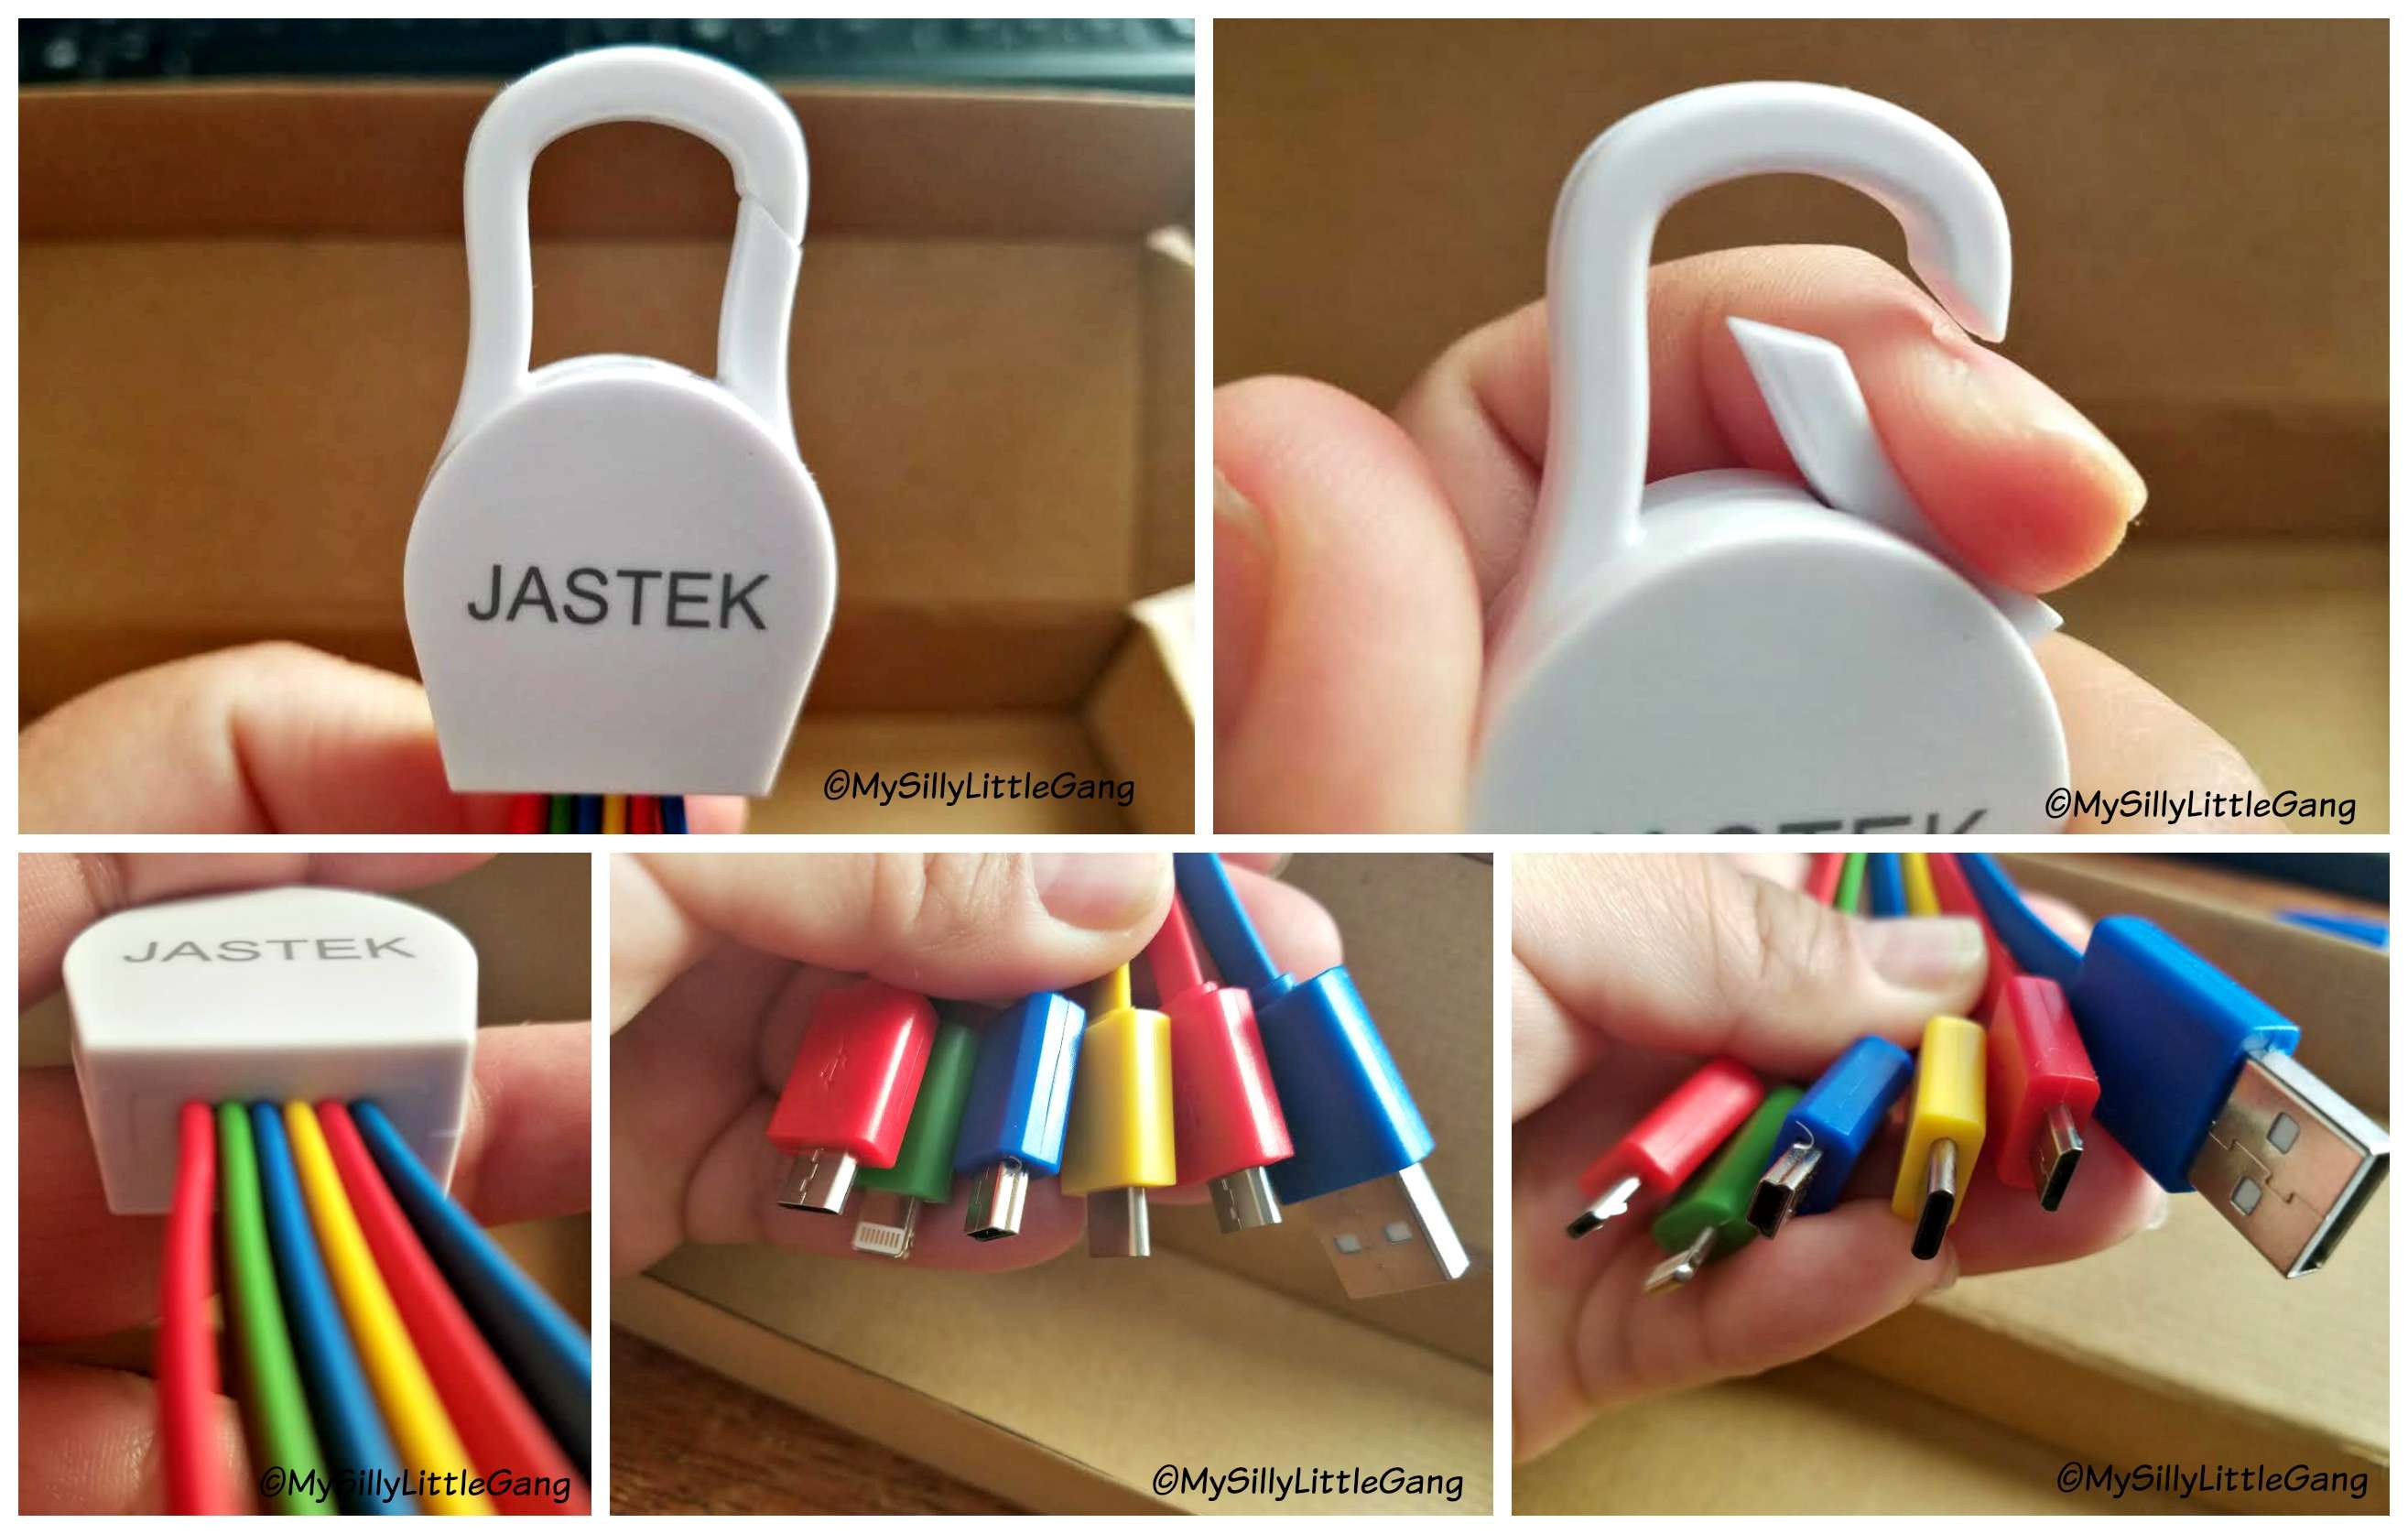 JASTEK Multi USB Cable Review